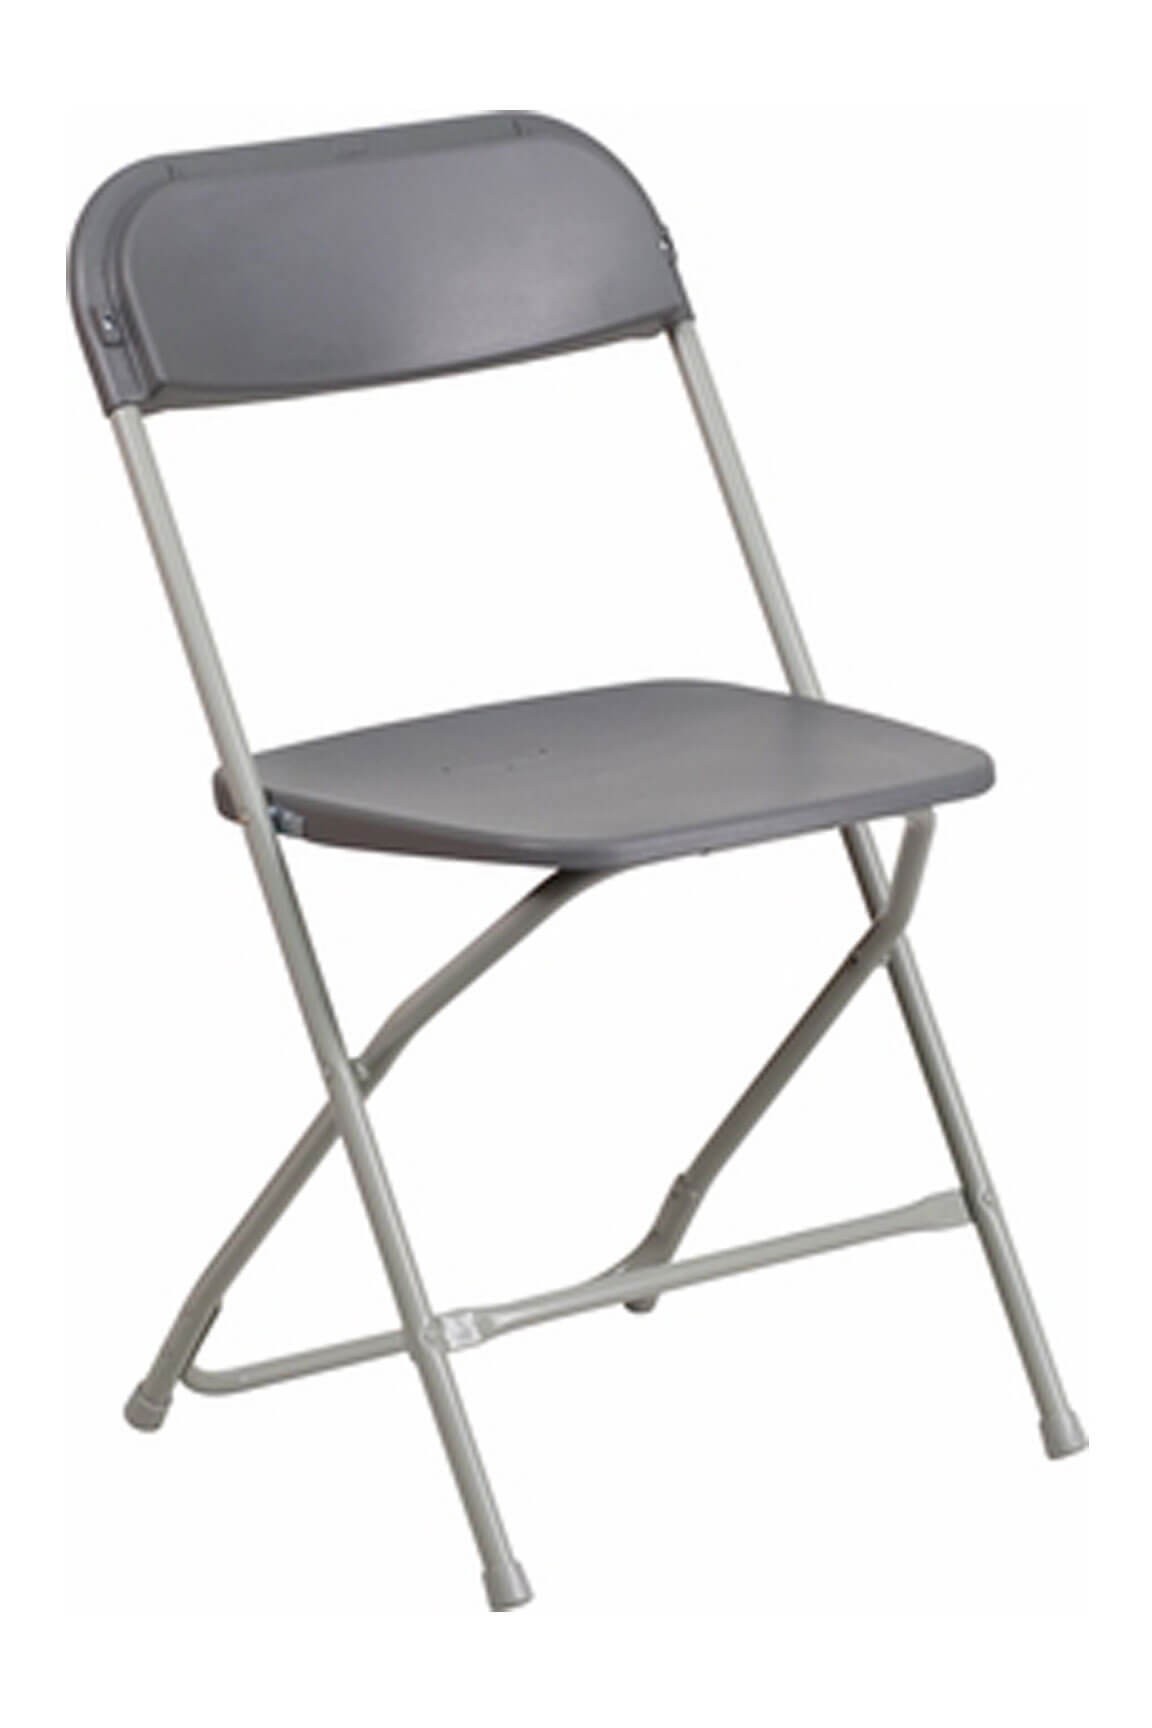 Plastic folding chair grey